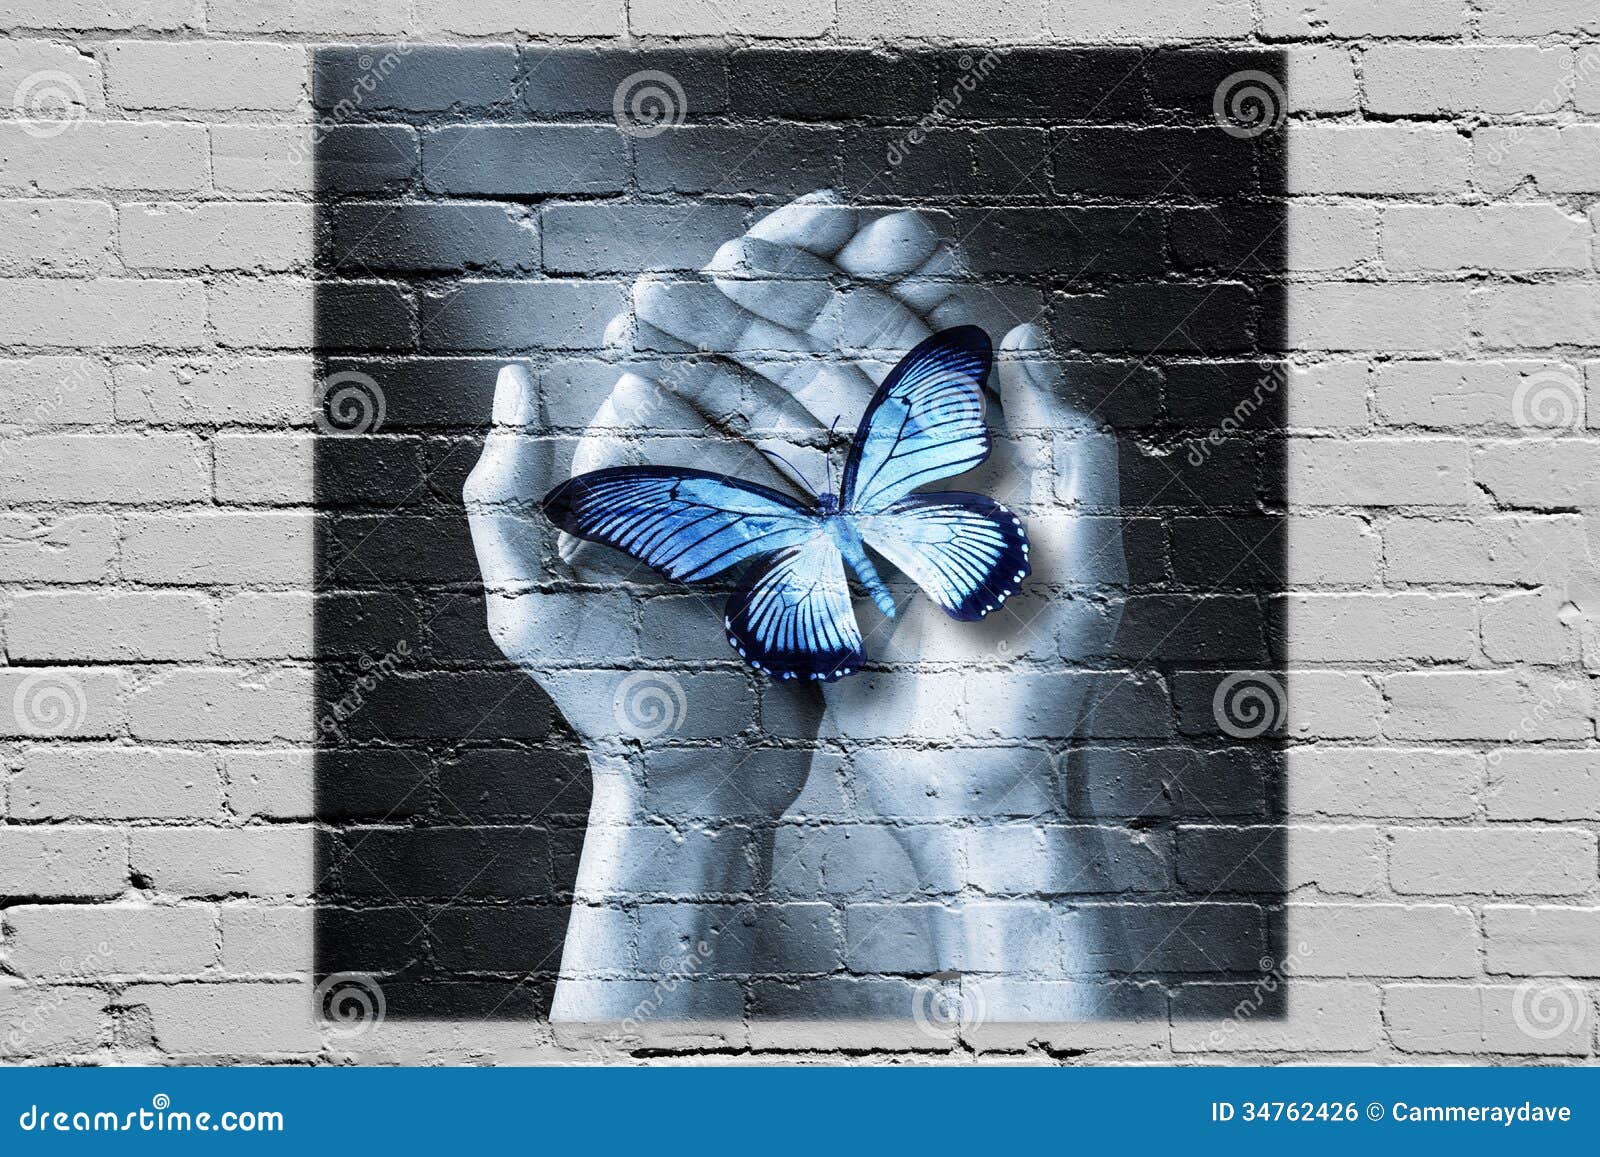 love butterfly graffiti compassion psychology hope